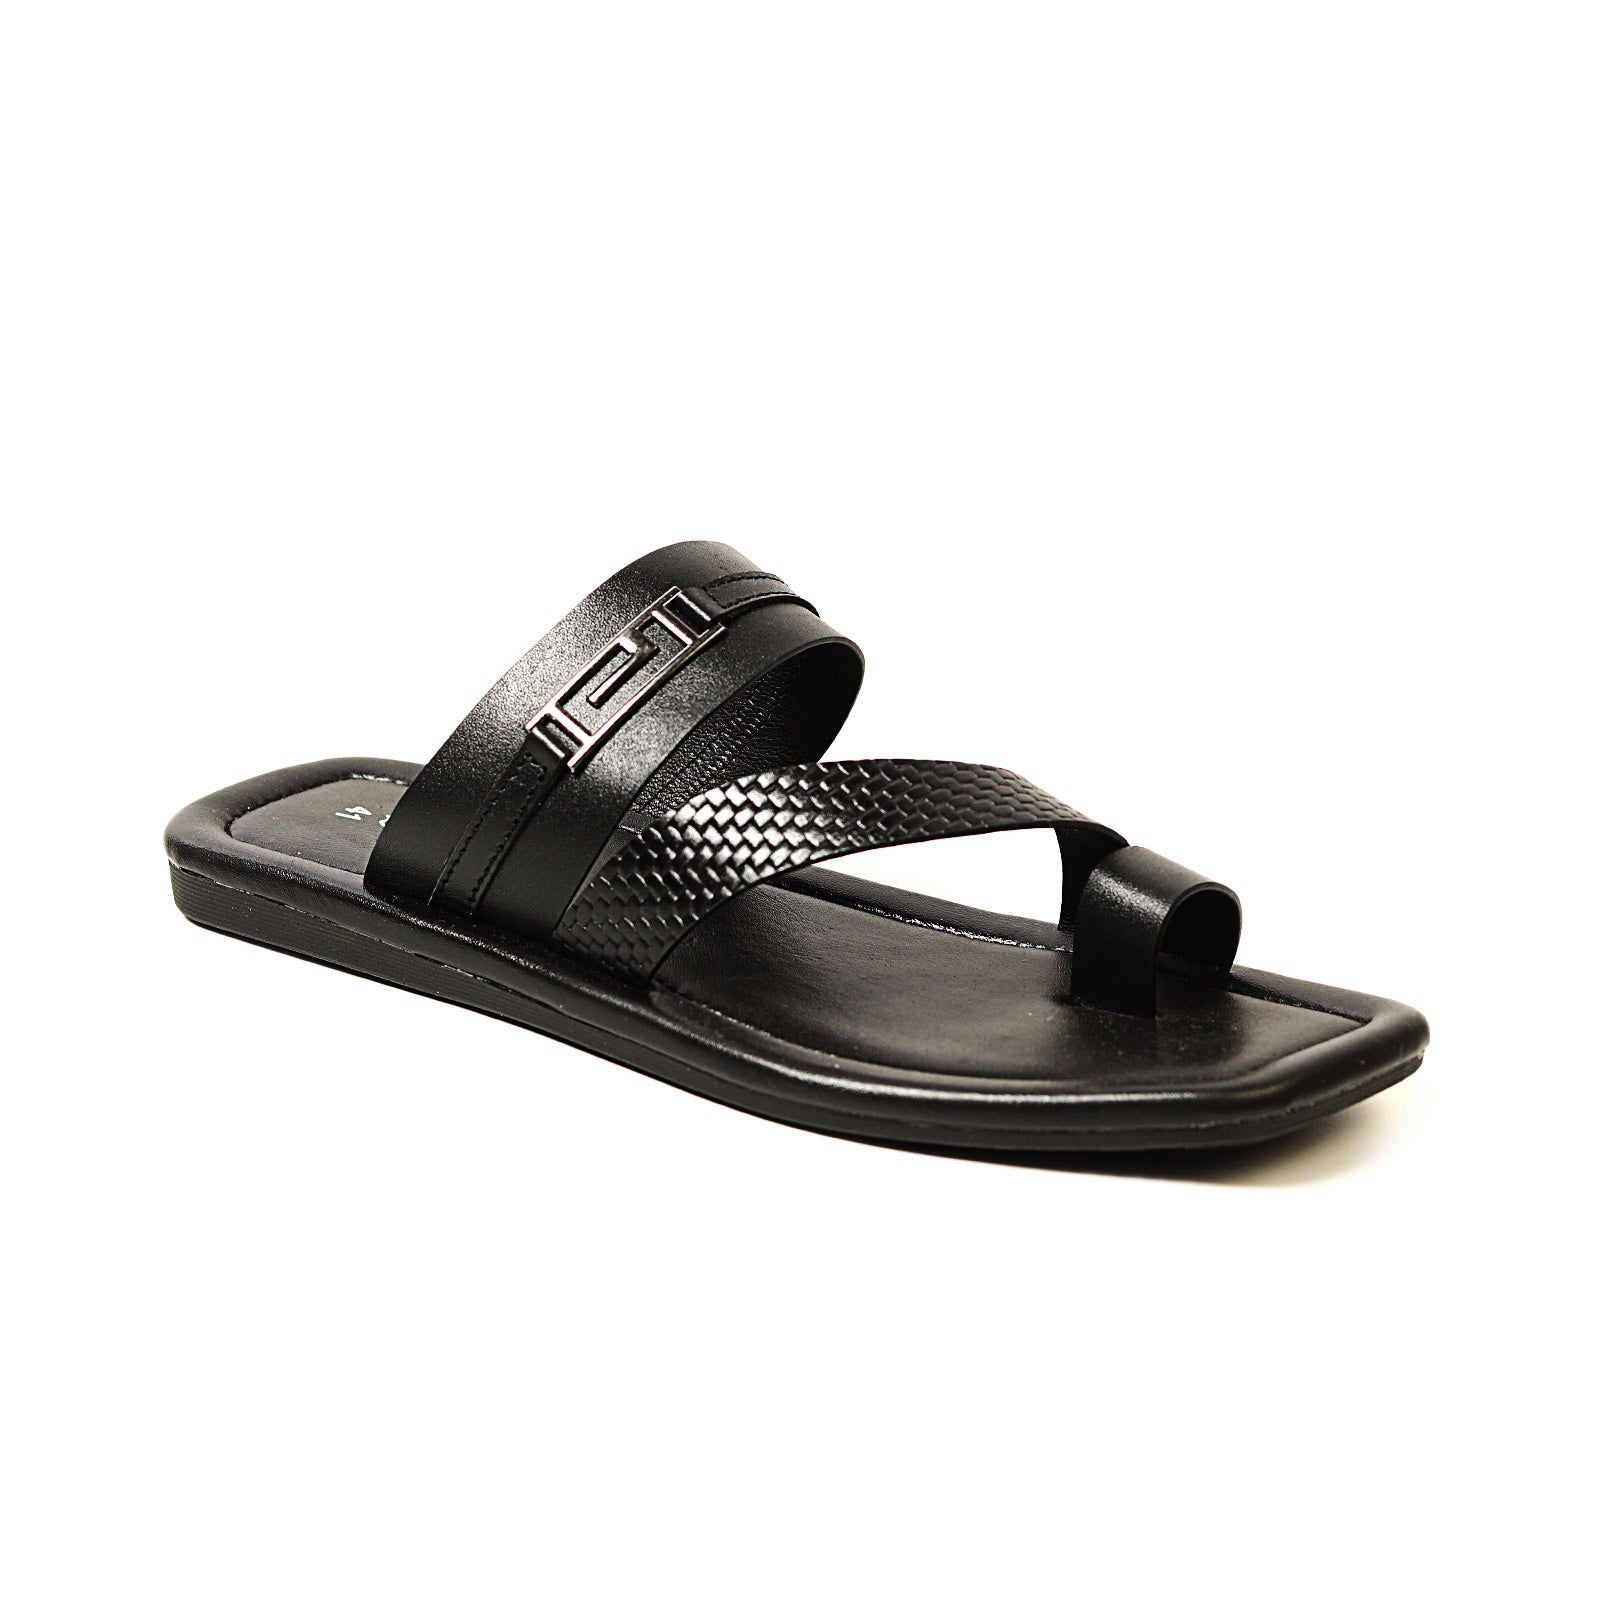 Zays Leather Sandal For Men (Black) - ZA13